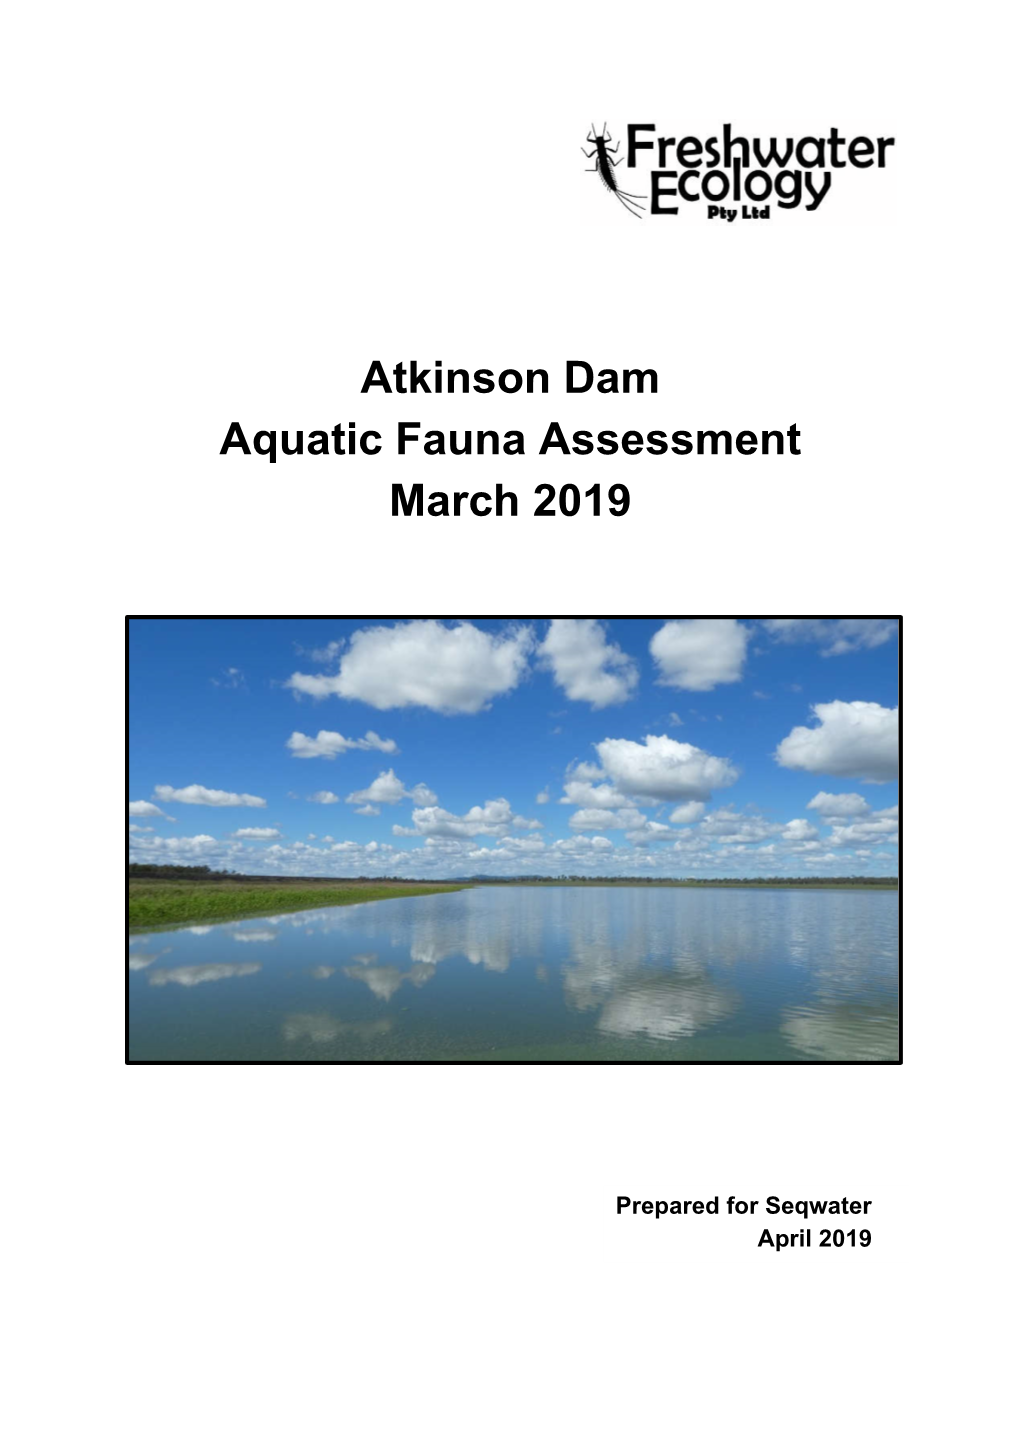 Atkinson Dam Aquatic Fauna Assessment March 2019